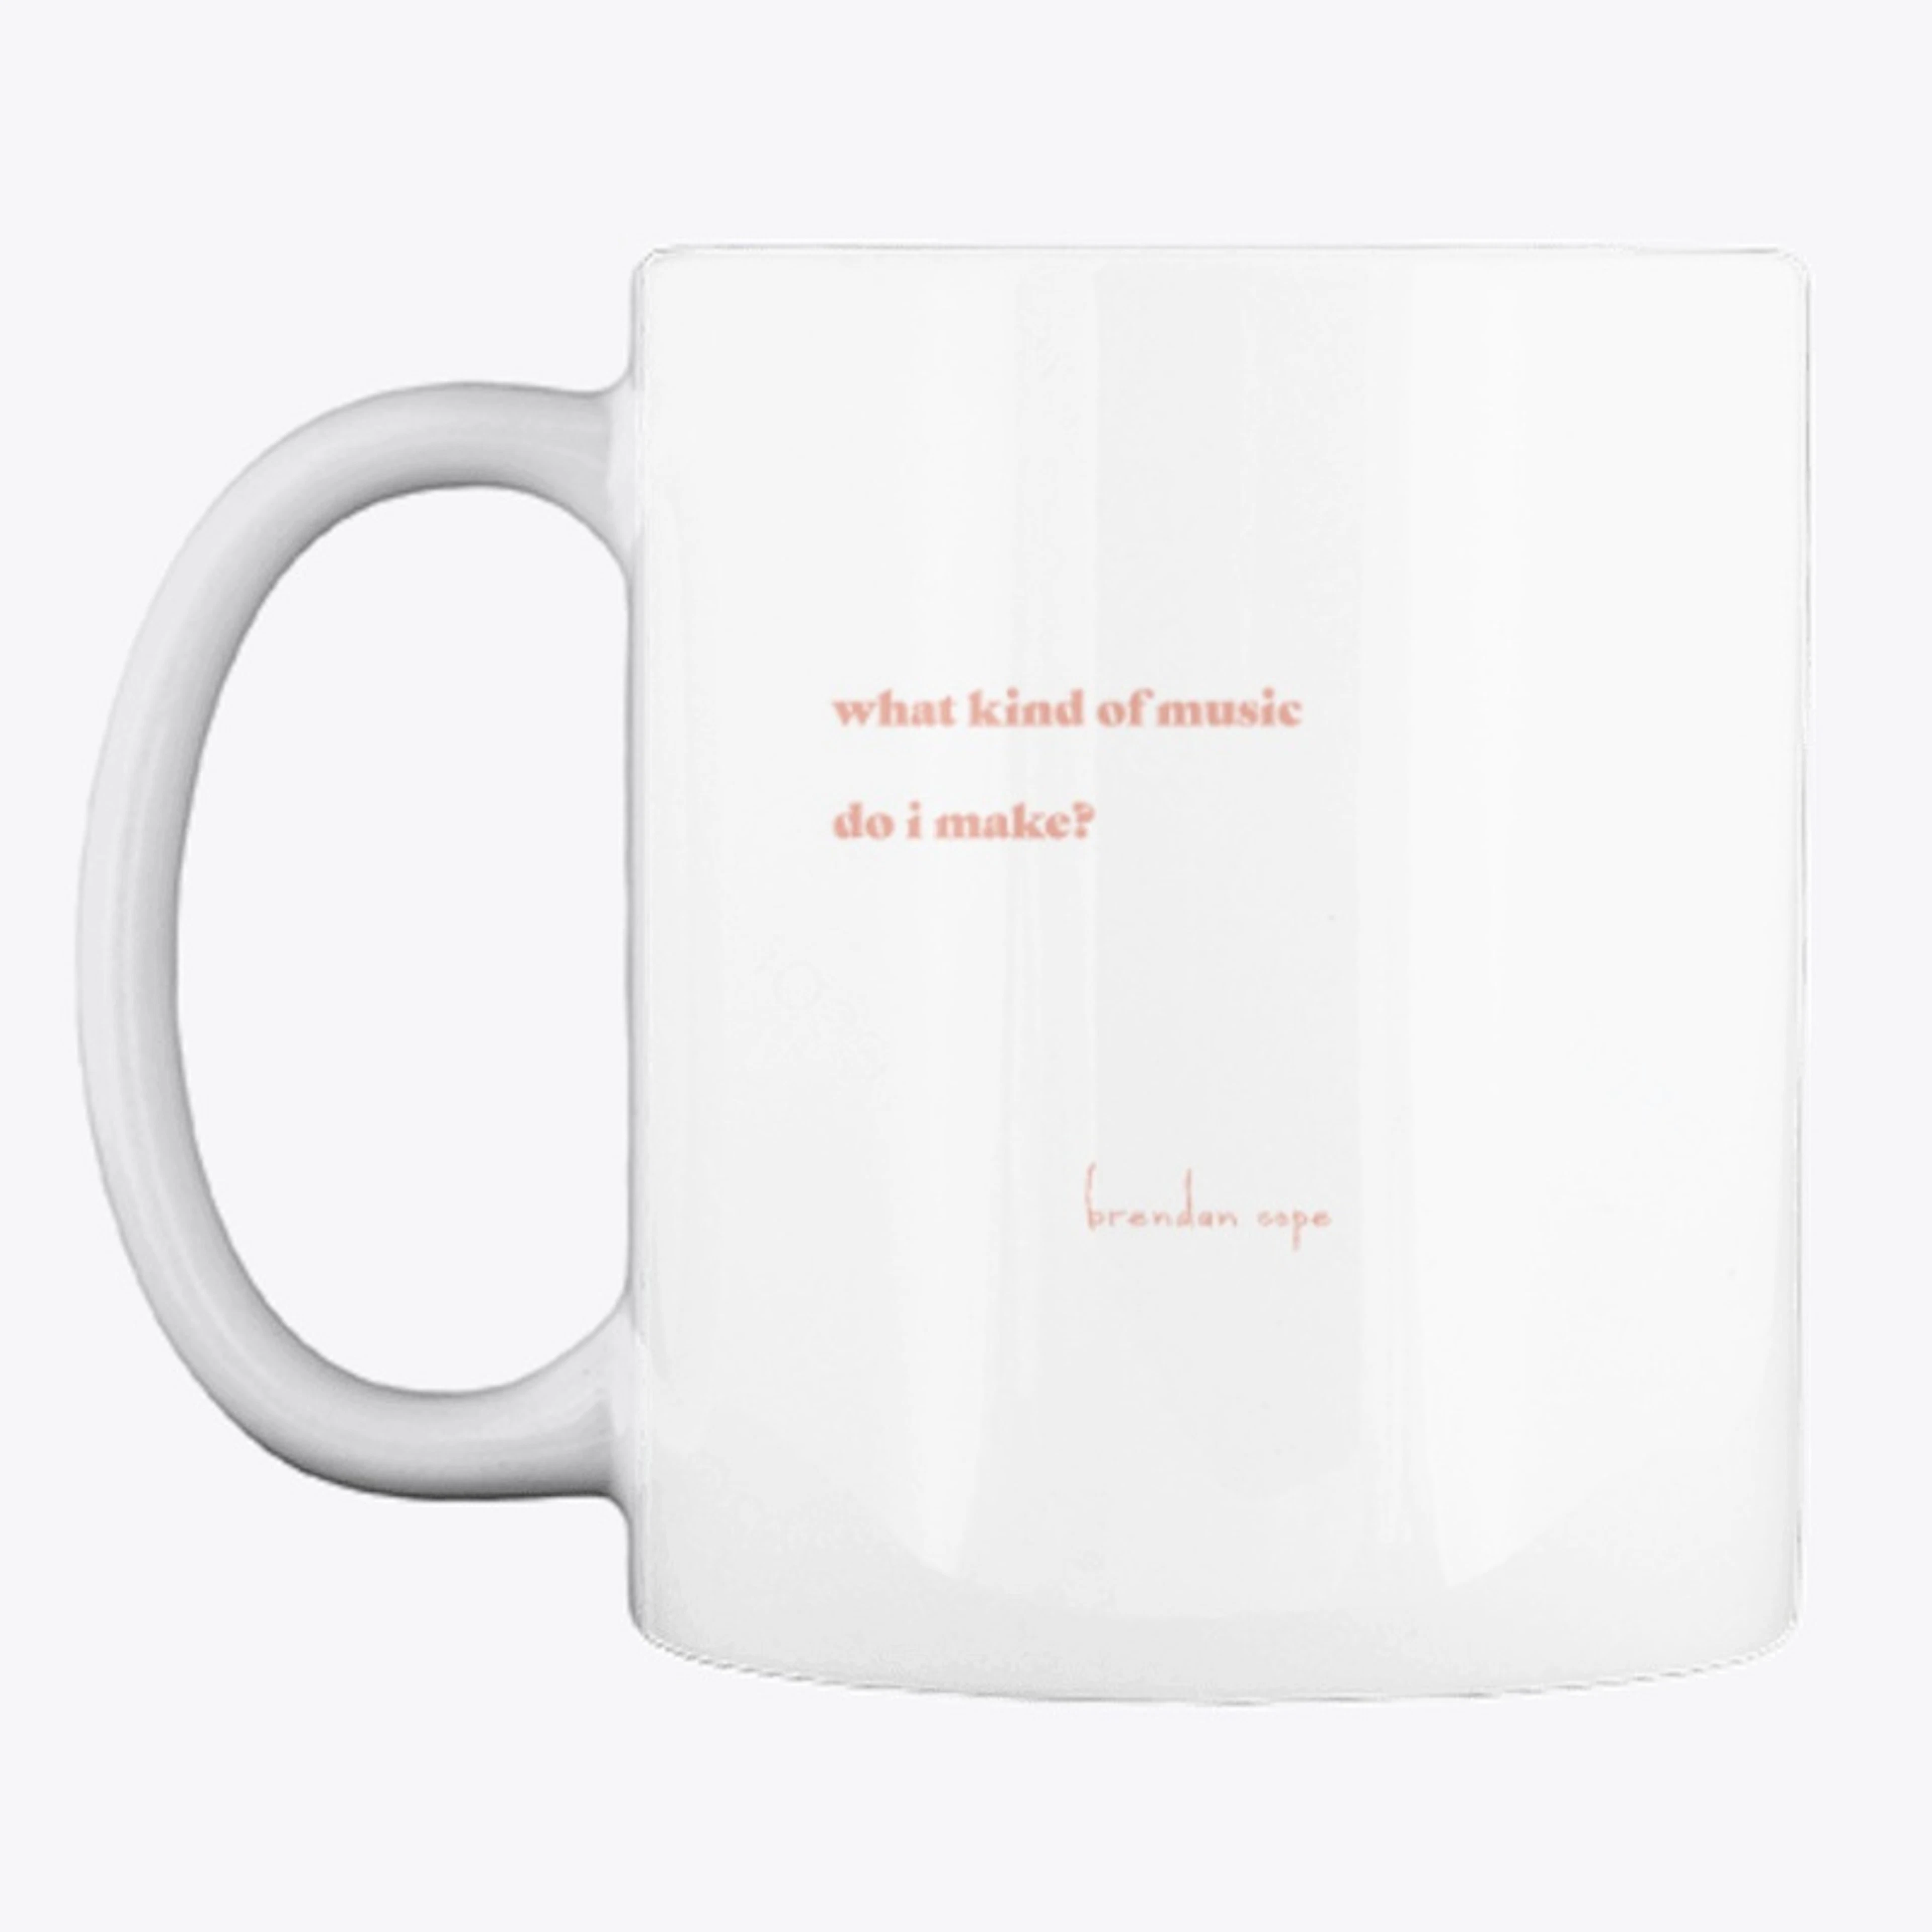 brendan cope genreless coffee mug